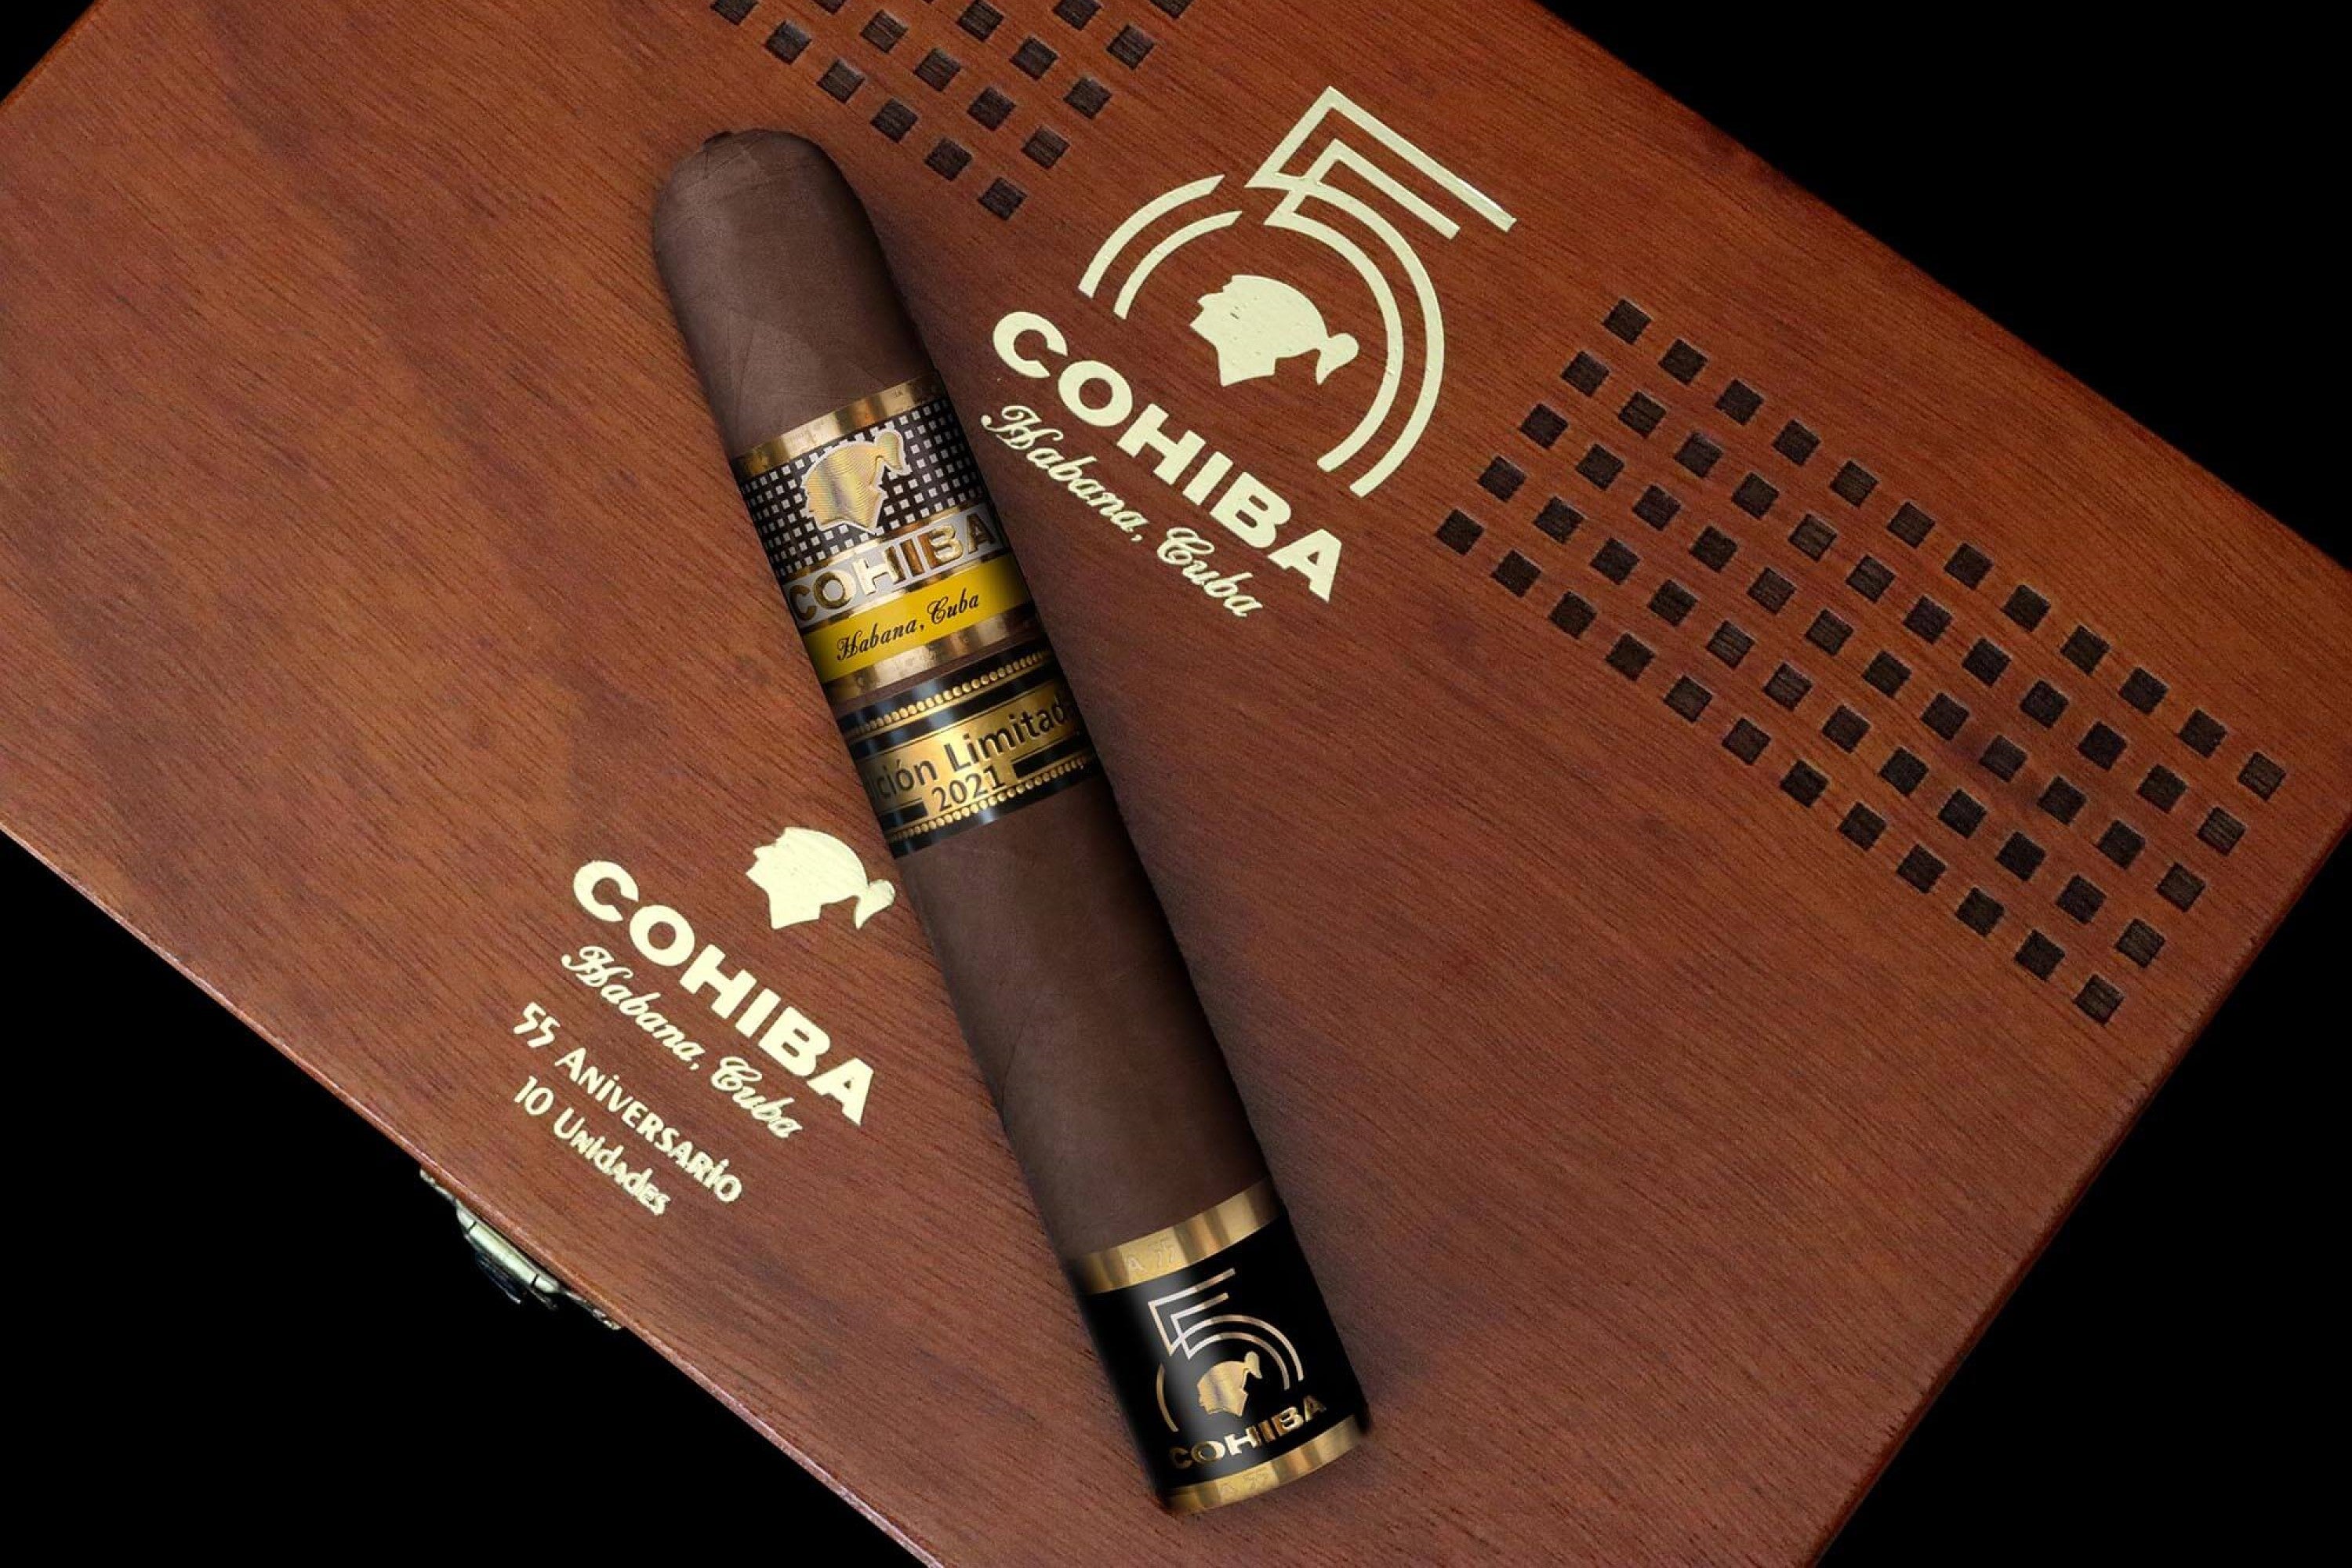 Cigar Case Casa Cubana - 2 Cigars calibre 27 - E BLUE